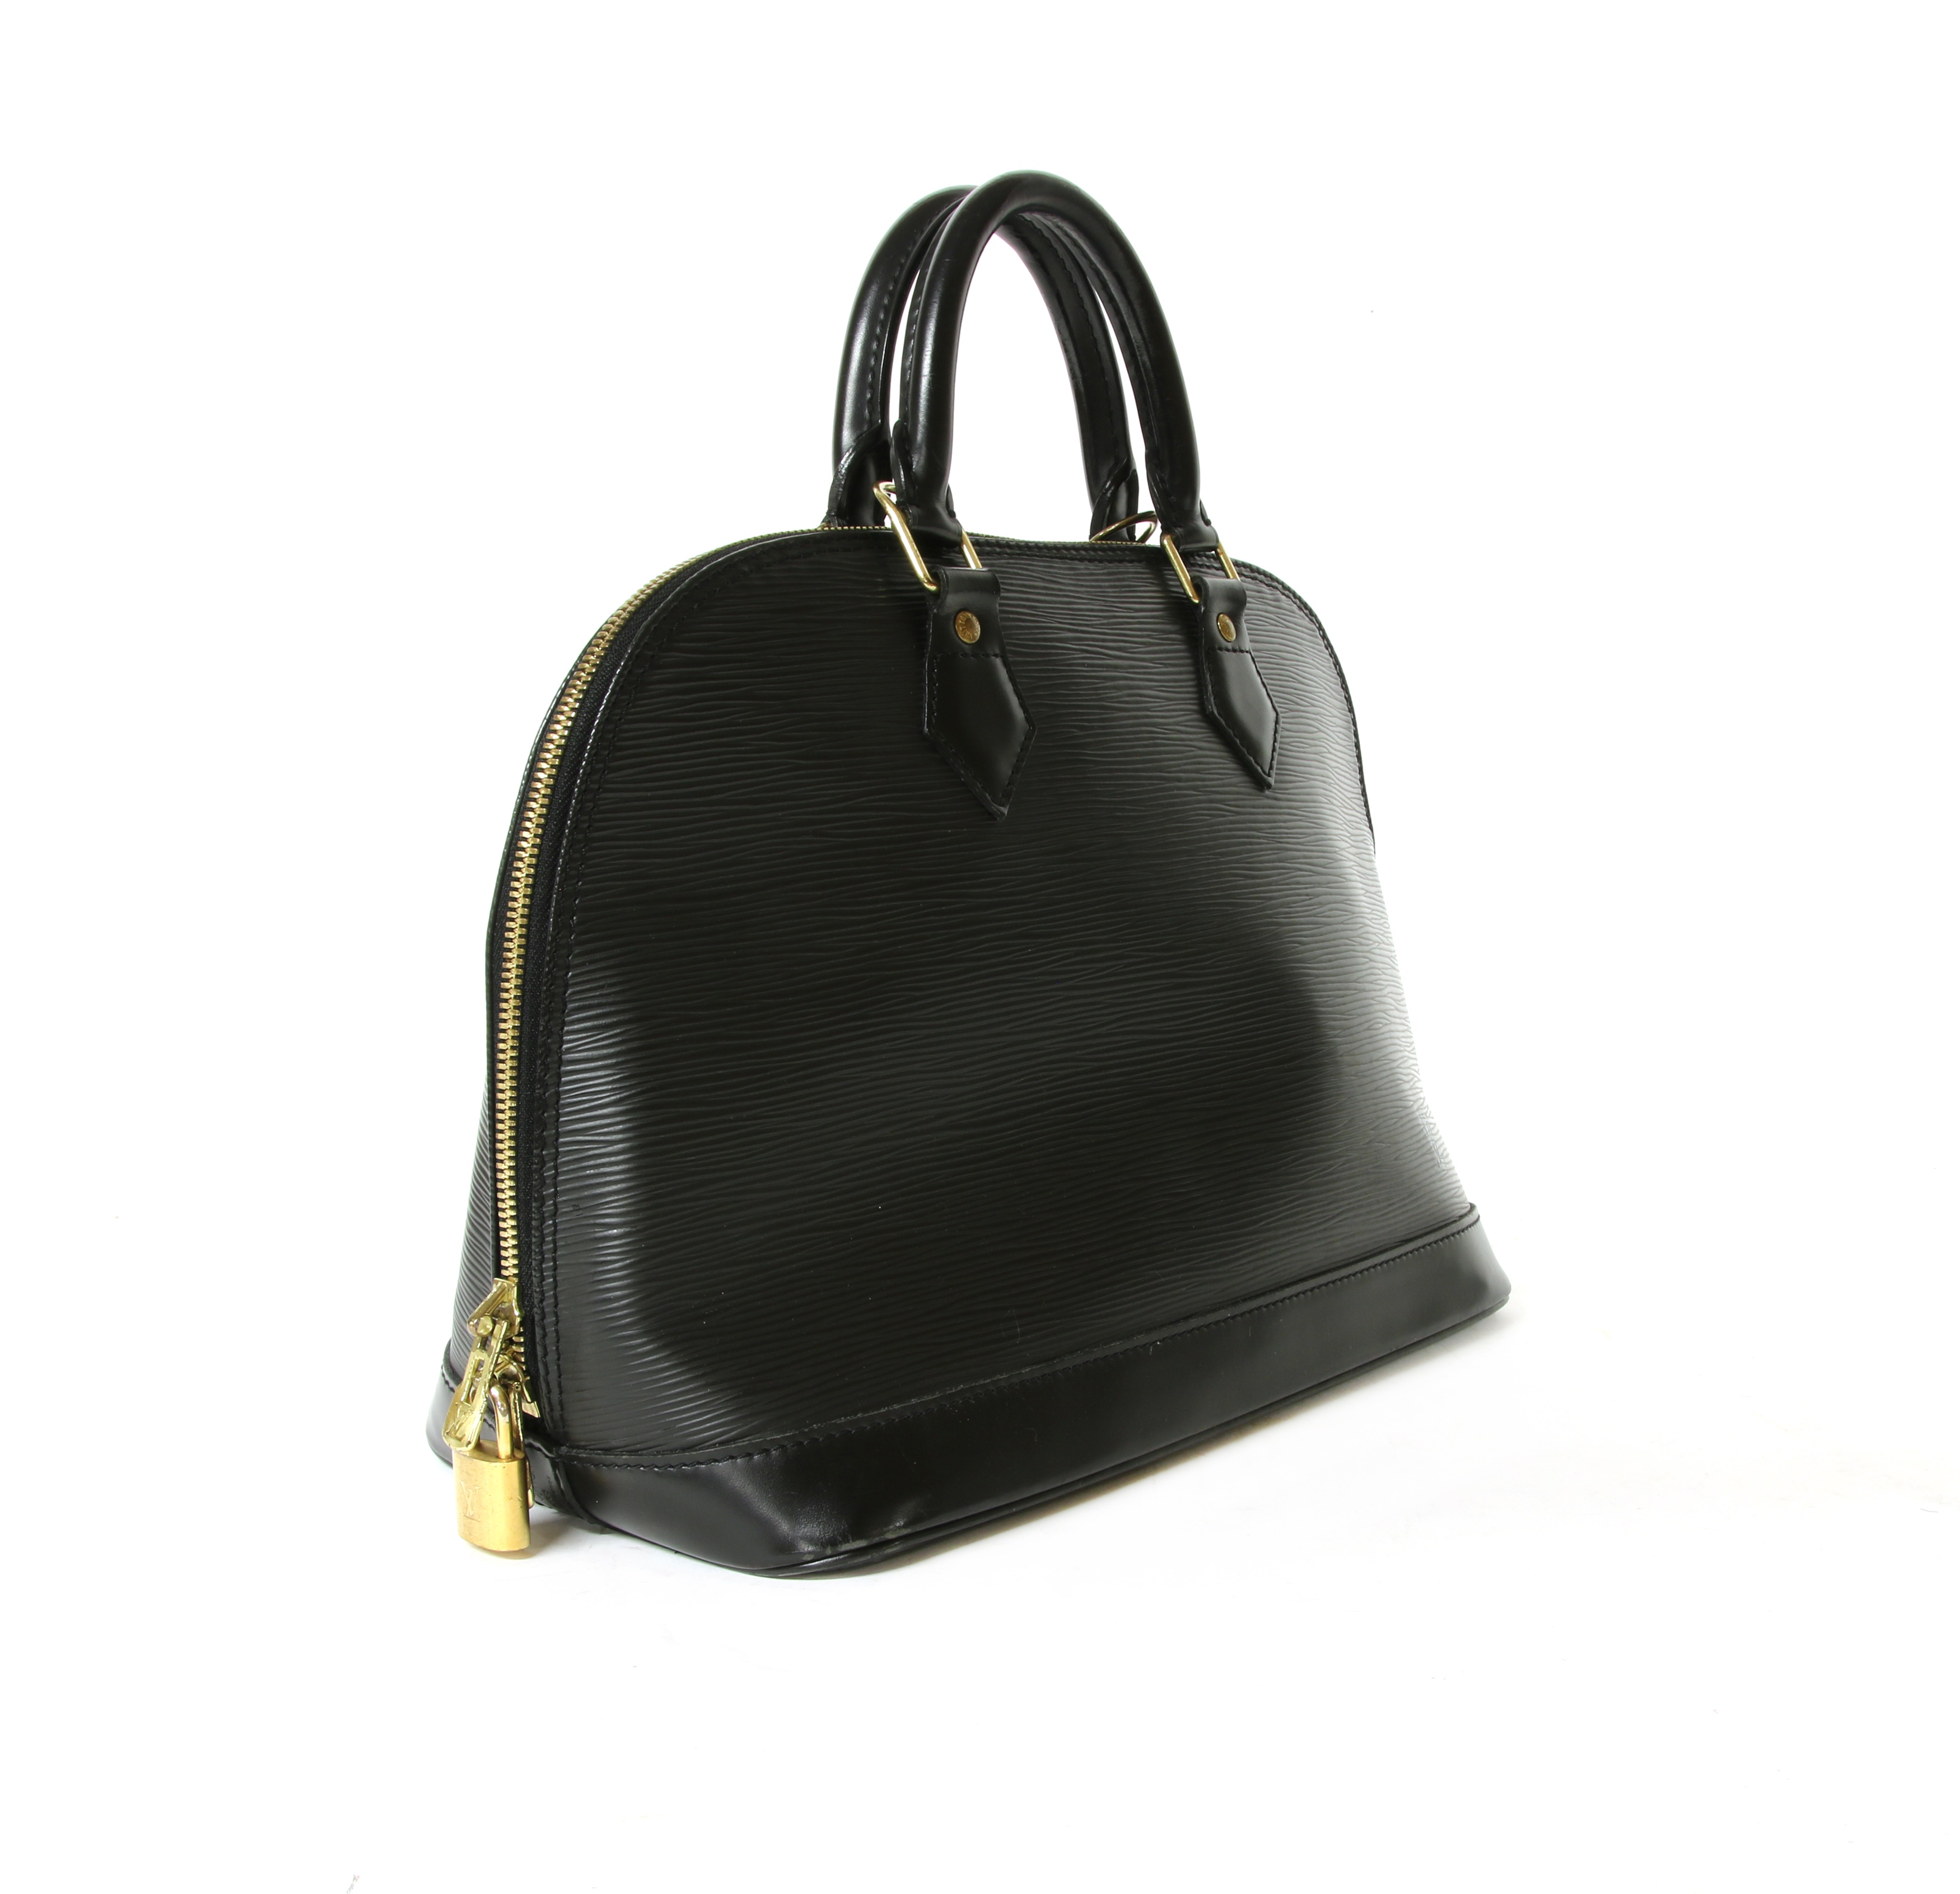 Sold at Auction: Louis Vuitton Patent Leather Barrel Bag